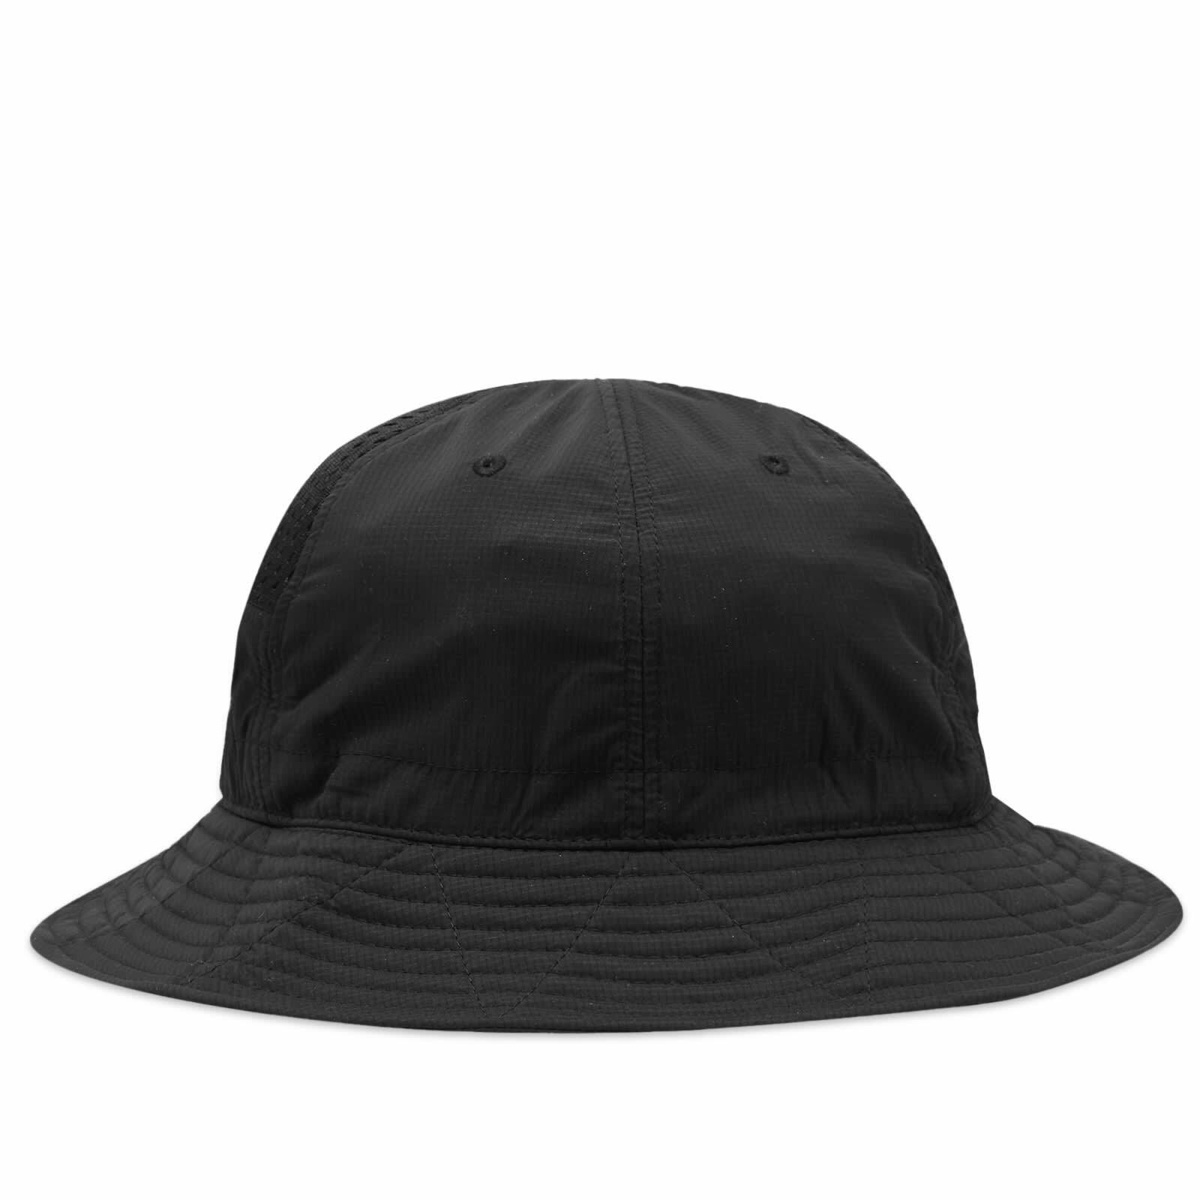 CAYL Men's Stretch Nylon Mesh Hat in Black CAYL